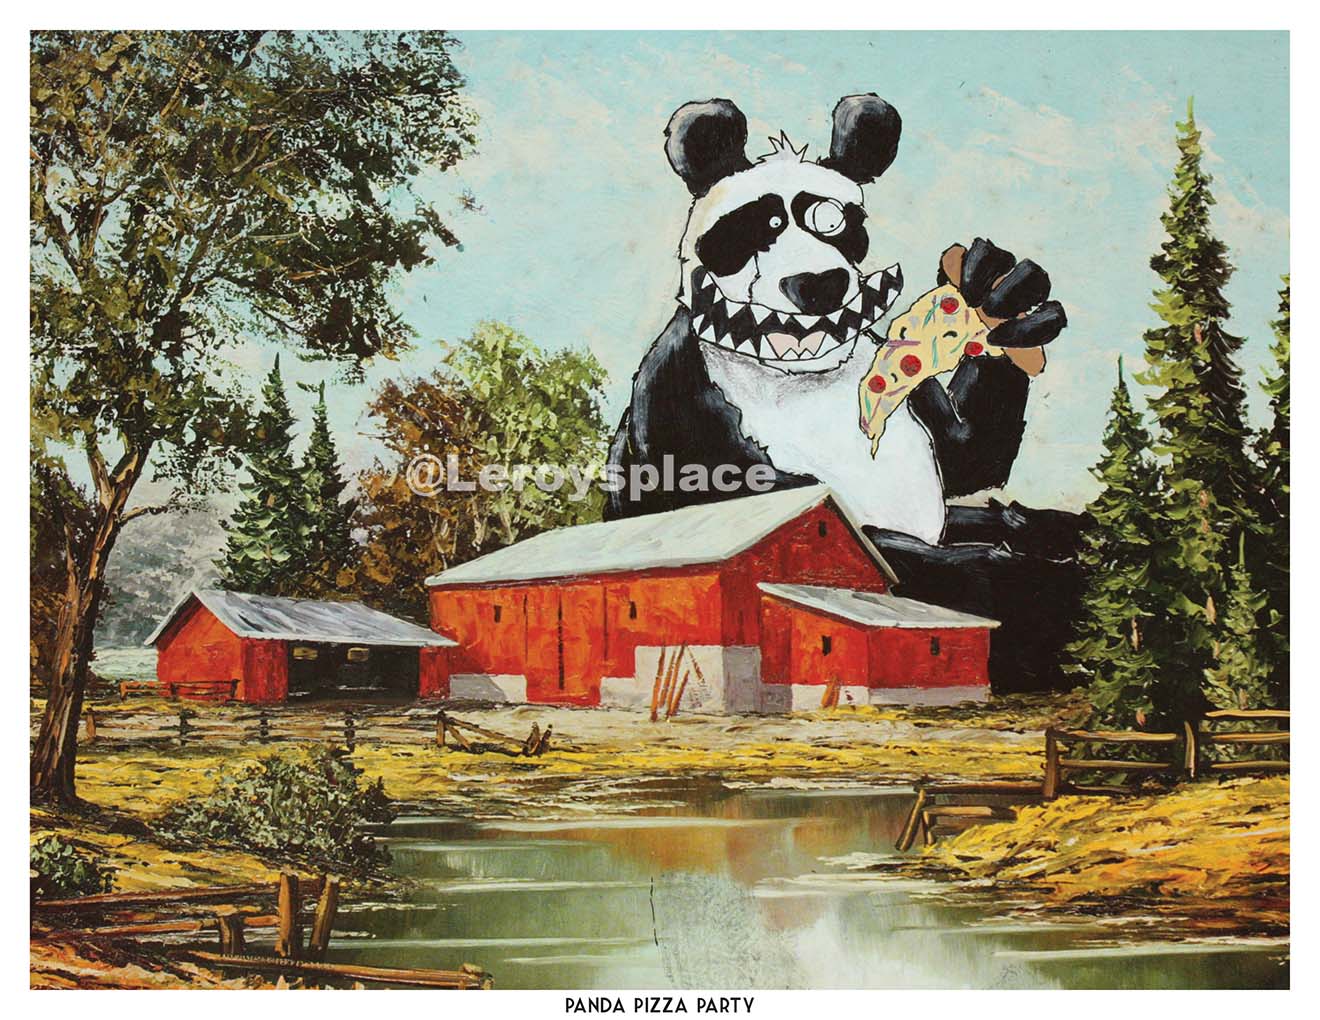 Panda Pizza Party - 8.5 x 11 Art Print | Leroy's Place